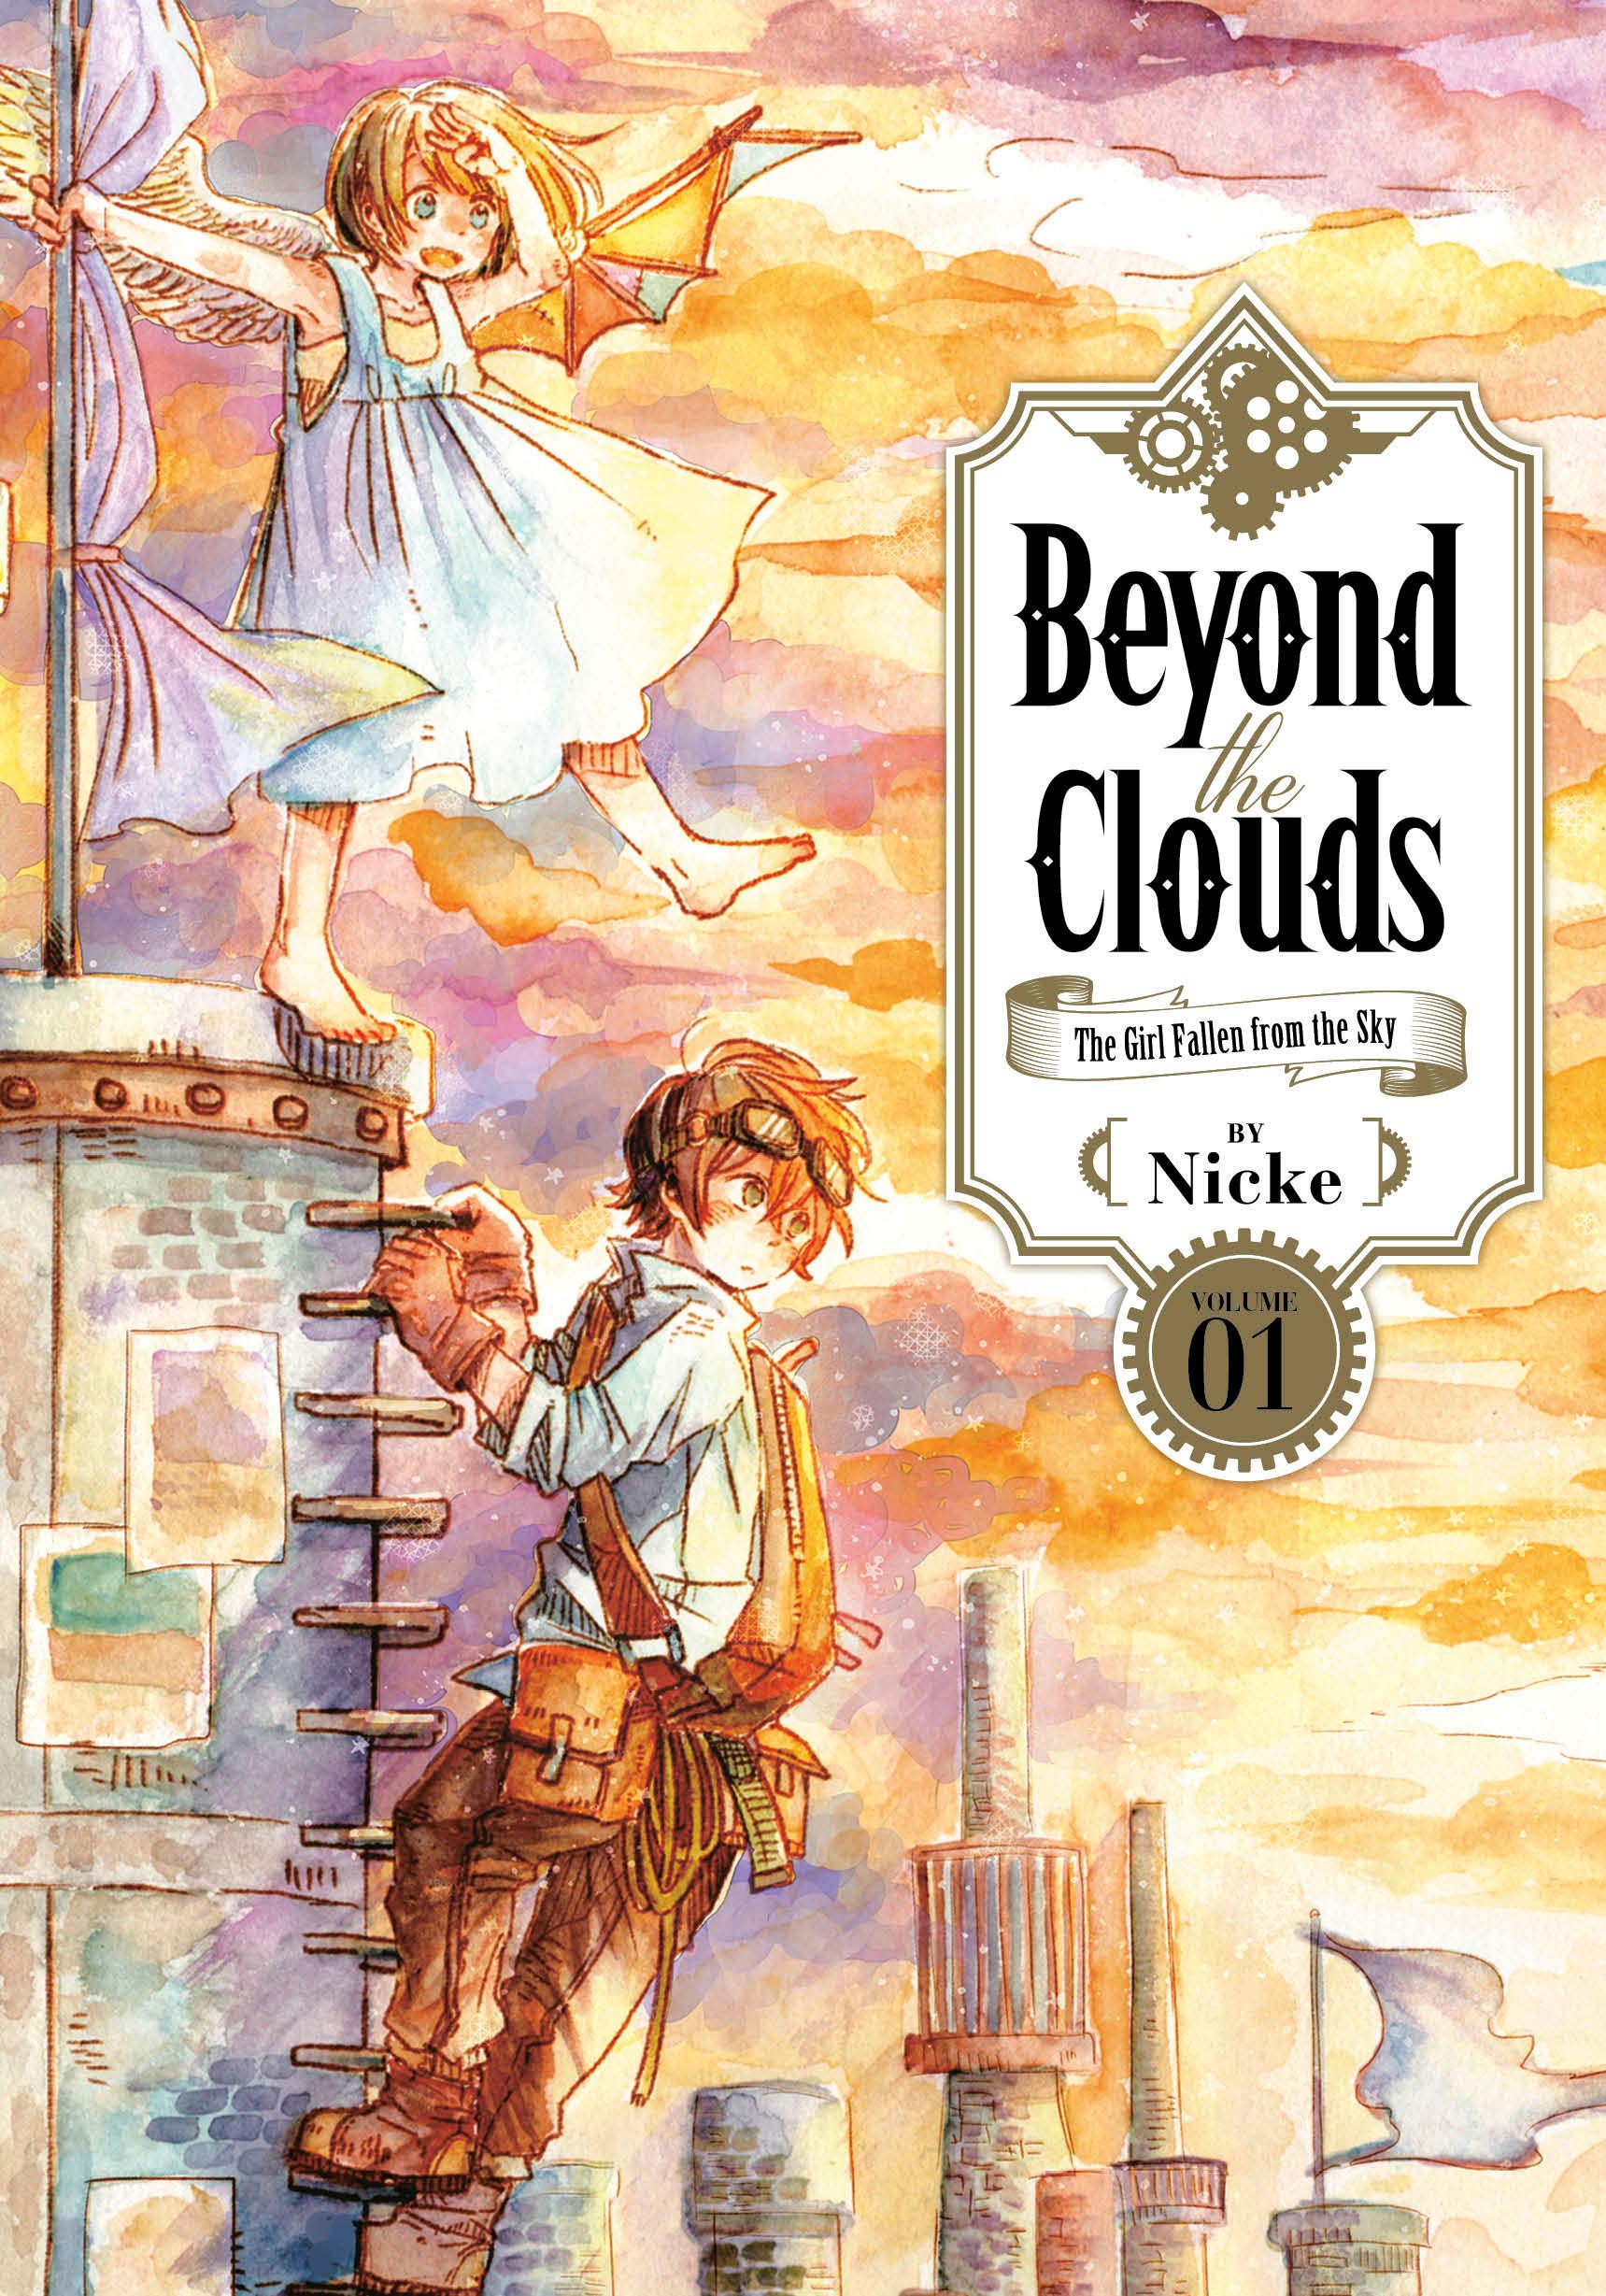 المانجا - Beyond the Clouds - حصاد الكتب 2020